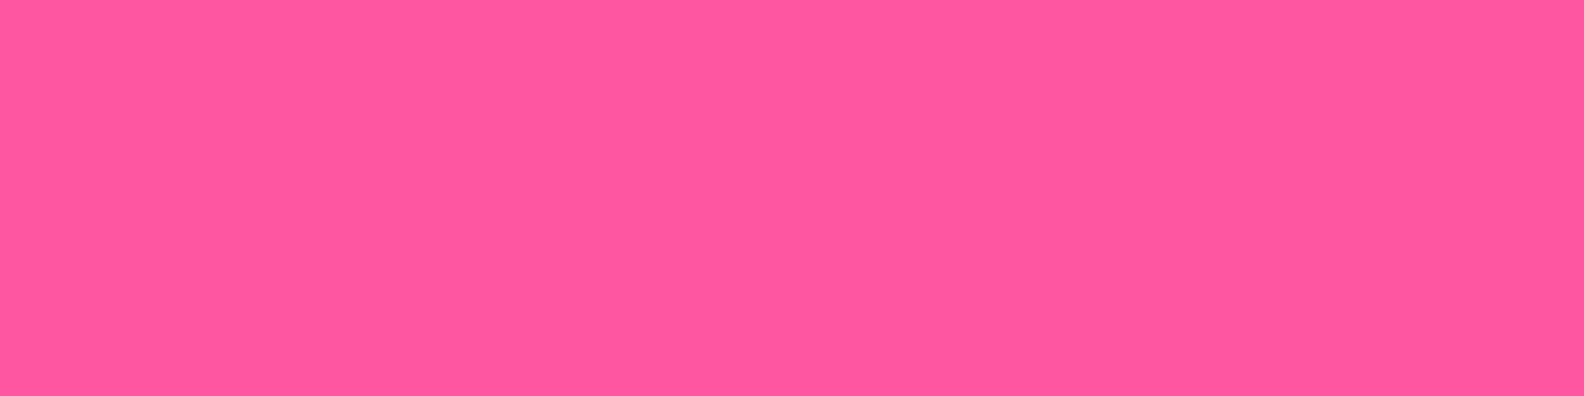 1584x396 Brilliant Rose Solid Color Background